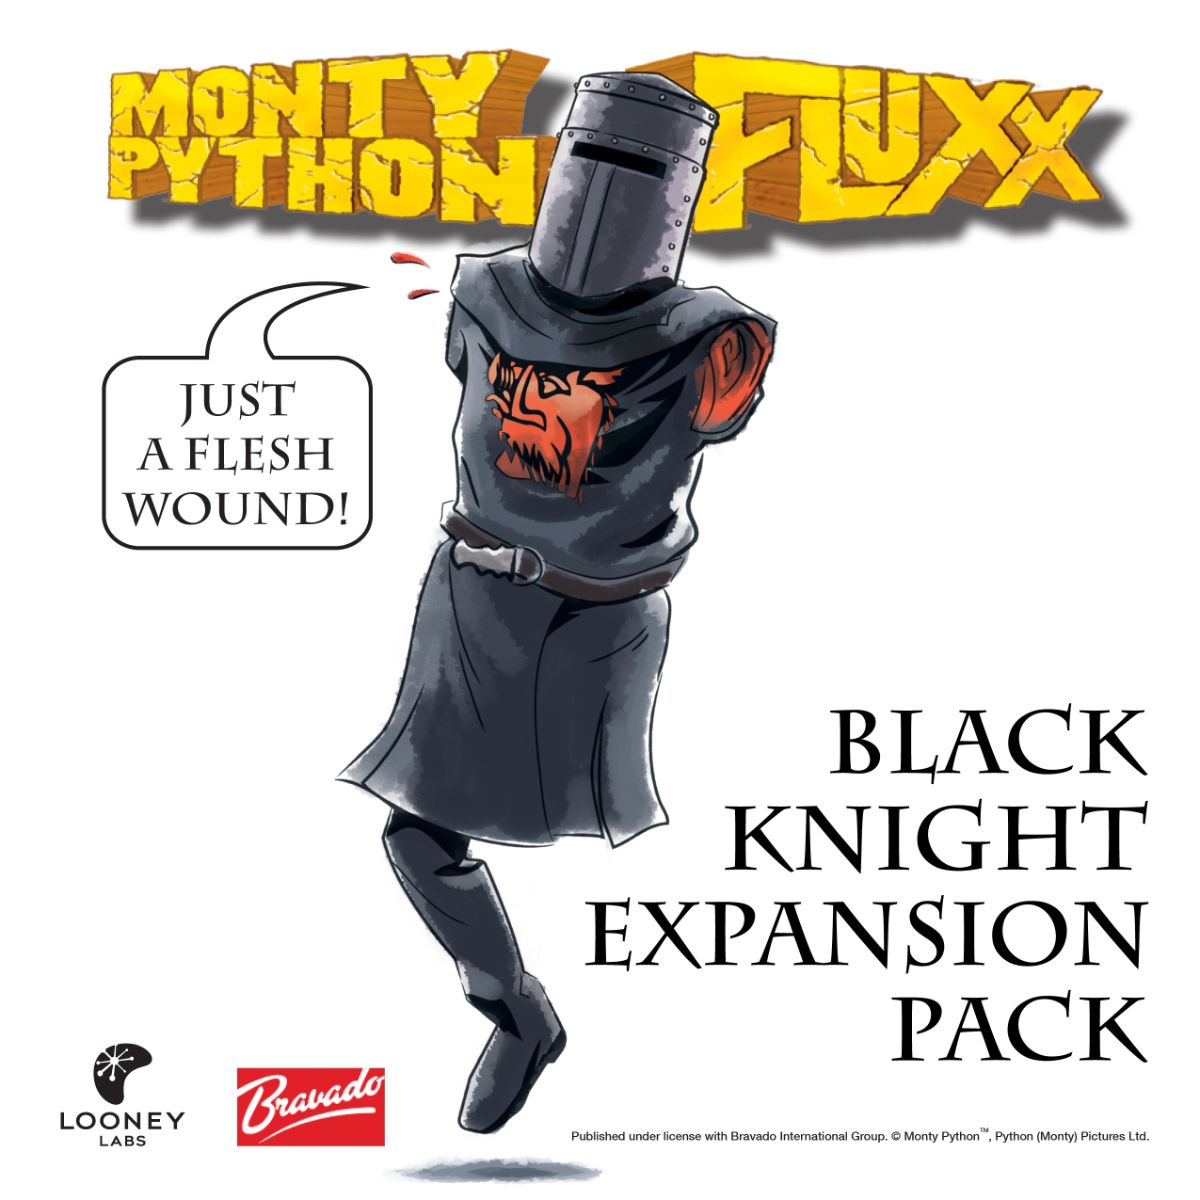 Monty Python Fluxx Game Looney Labs Castle Expansion Pack of 7 cards SEALED